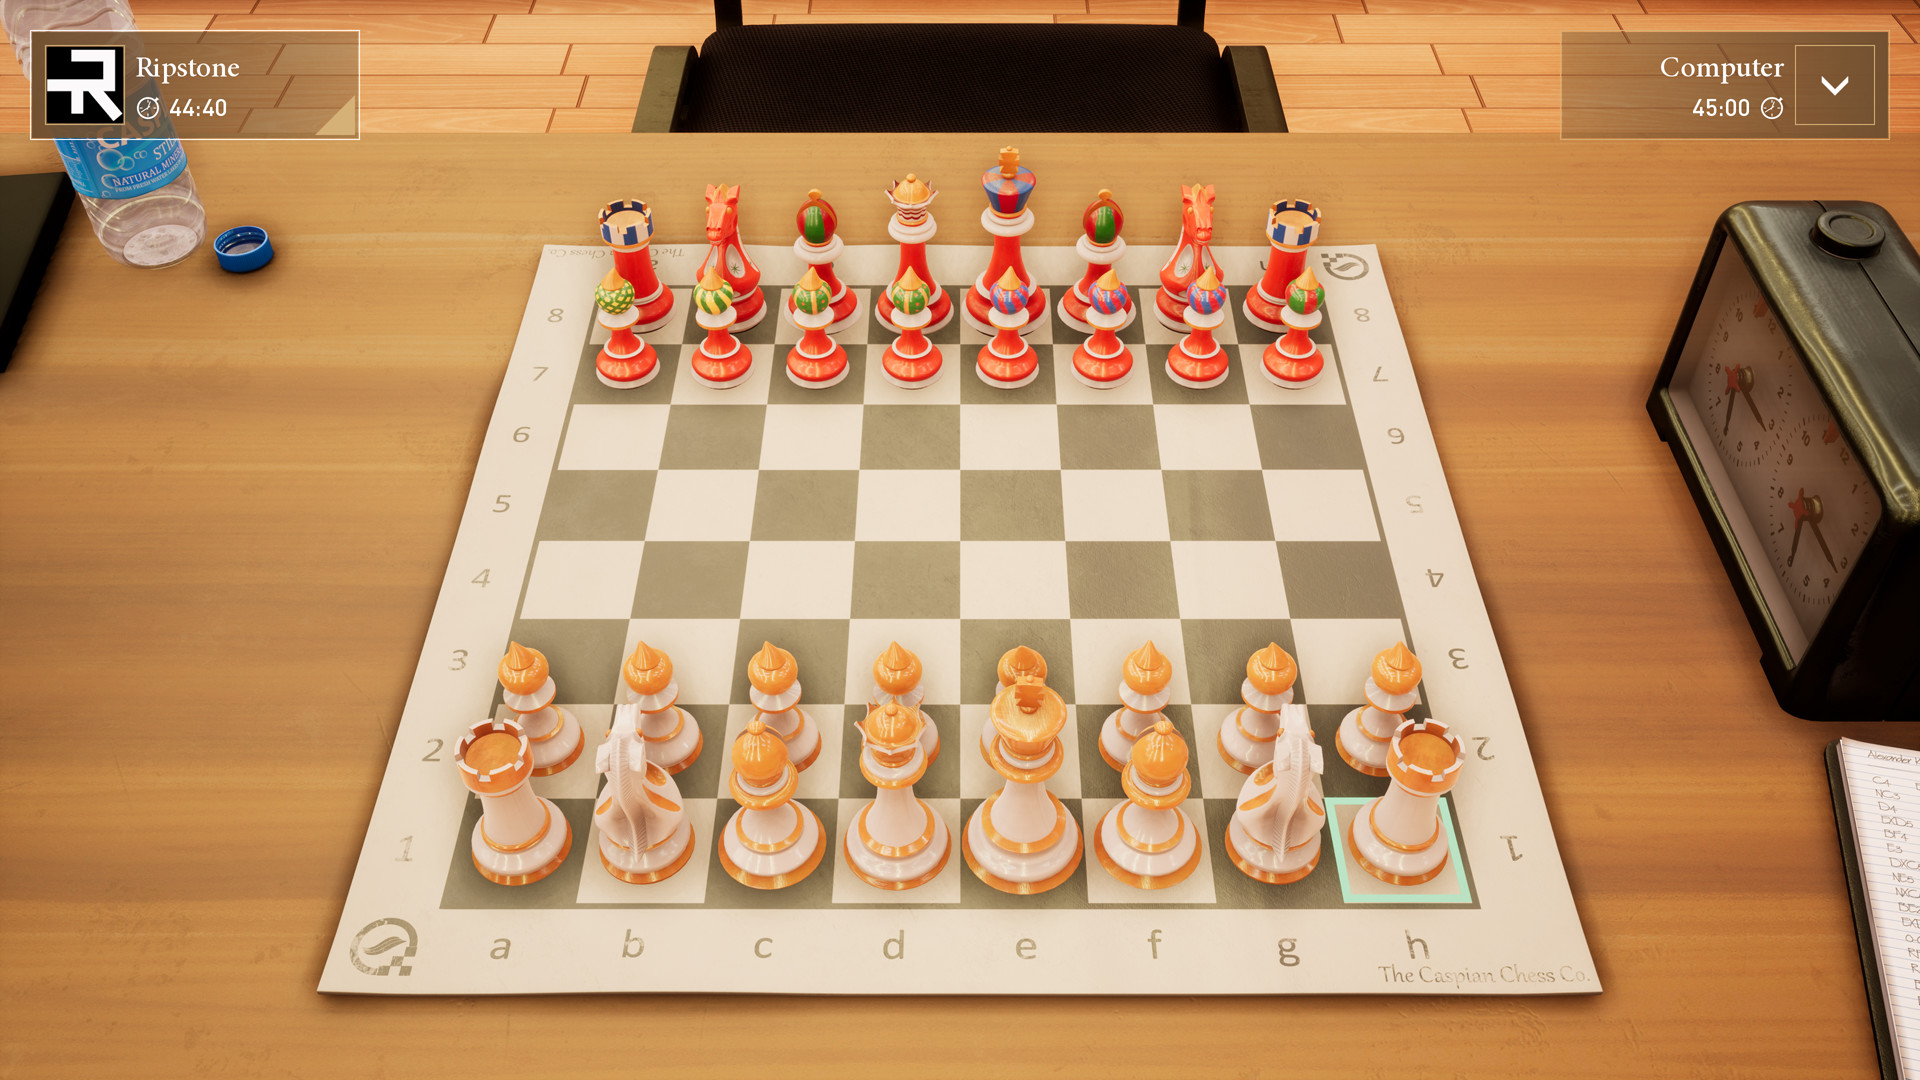 Chess Ultra X Purling London Nette Robinson Art Chess on Steam